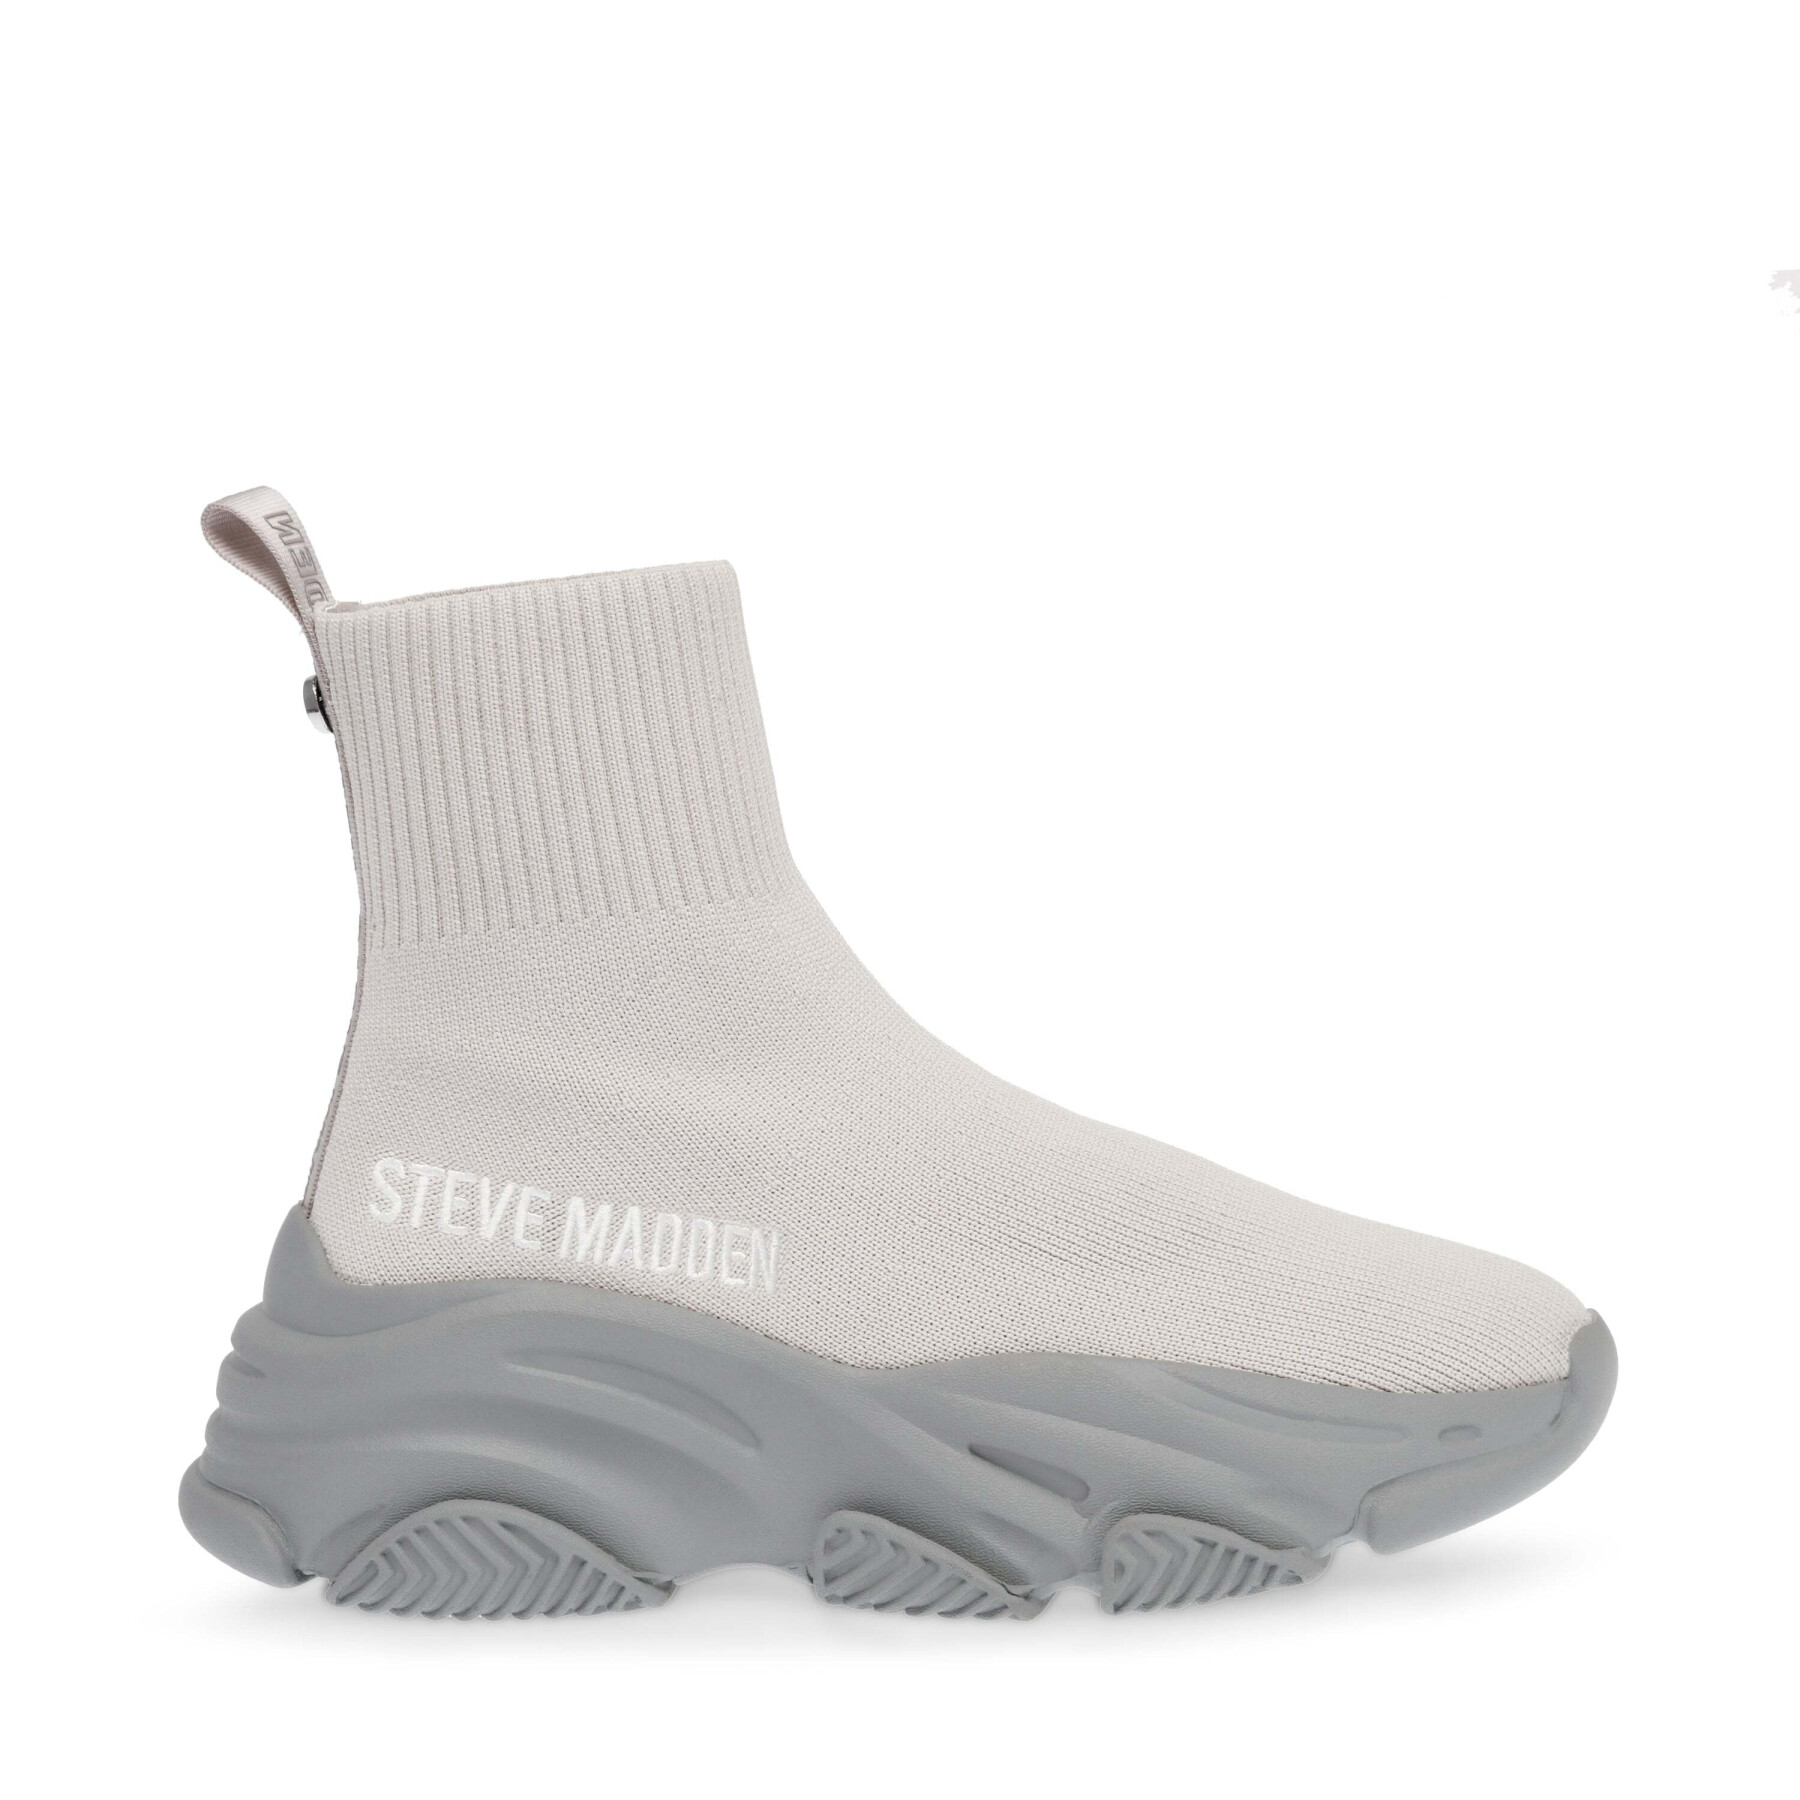 Sneakers Steve Madden Prodigy